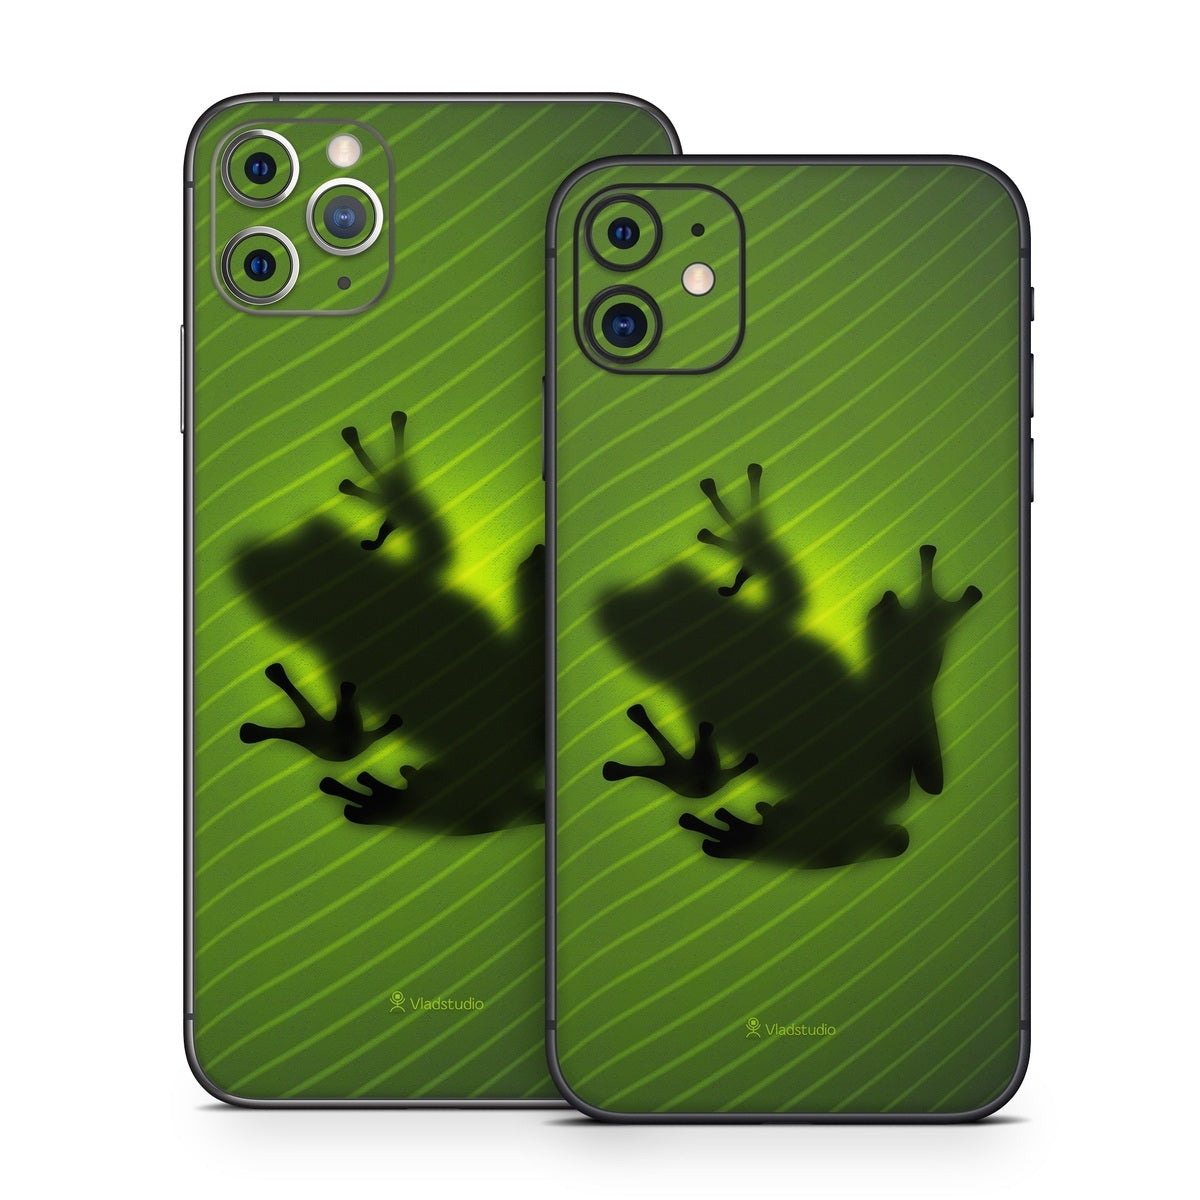 Frog - Apple iPhone 11 Skin